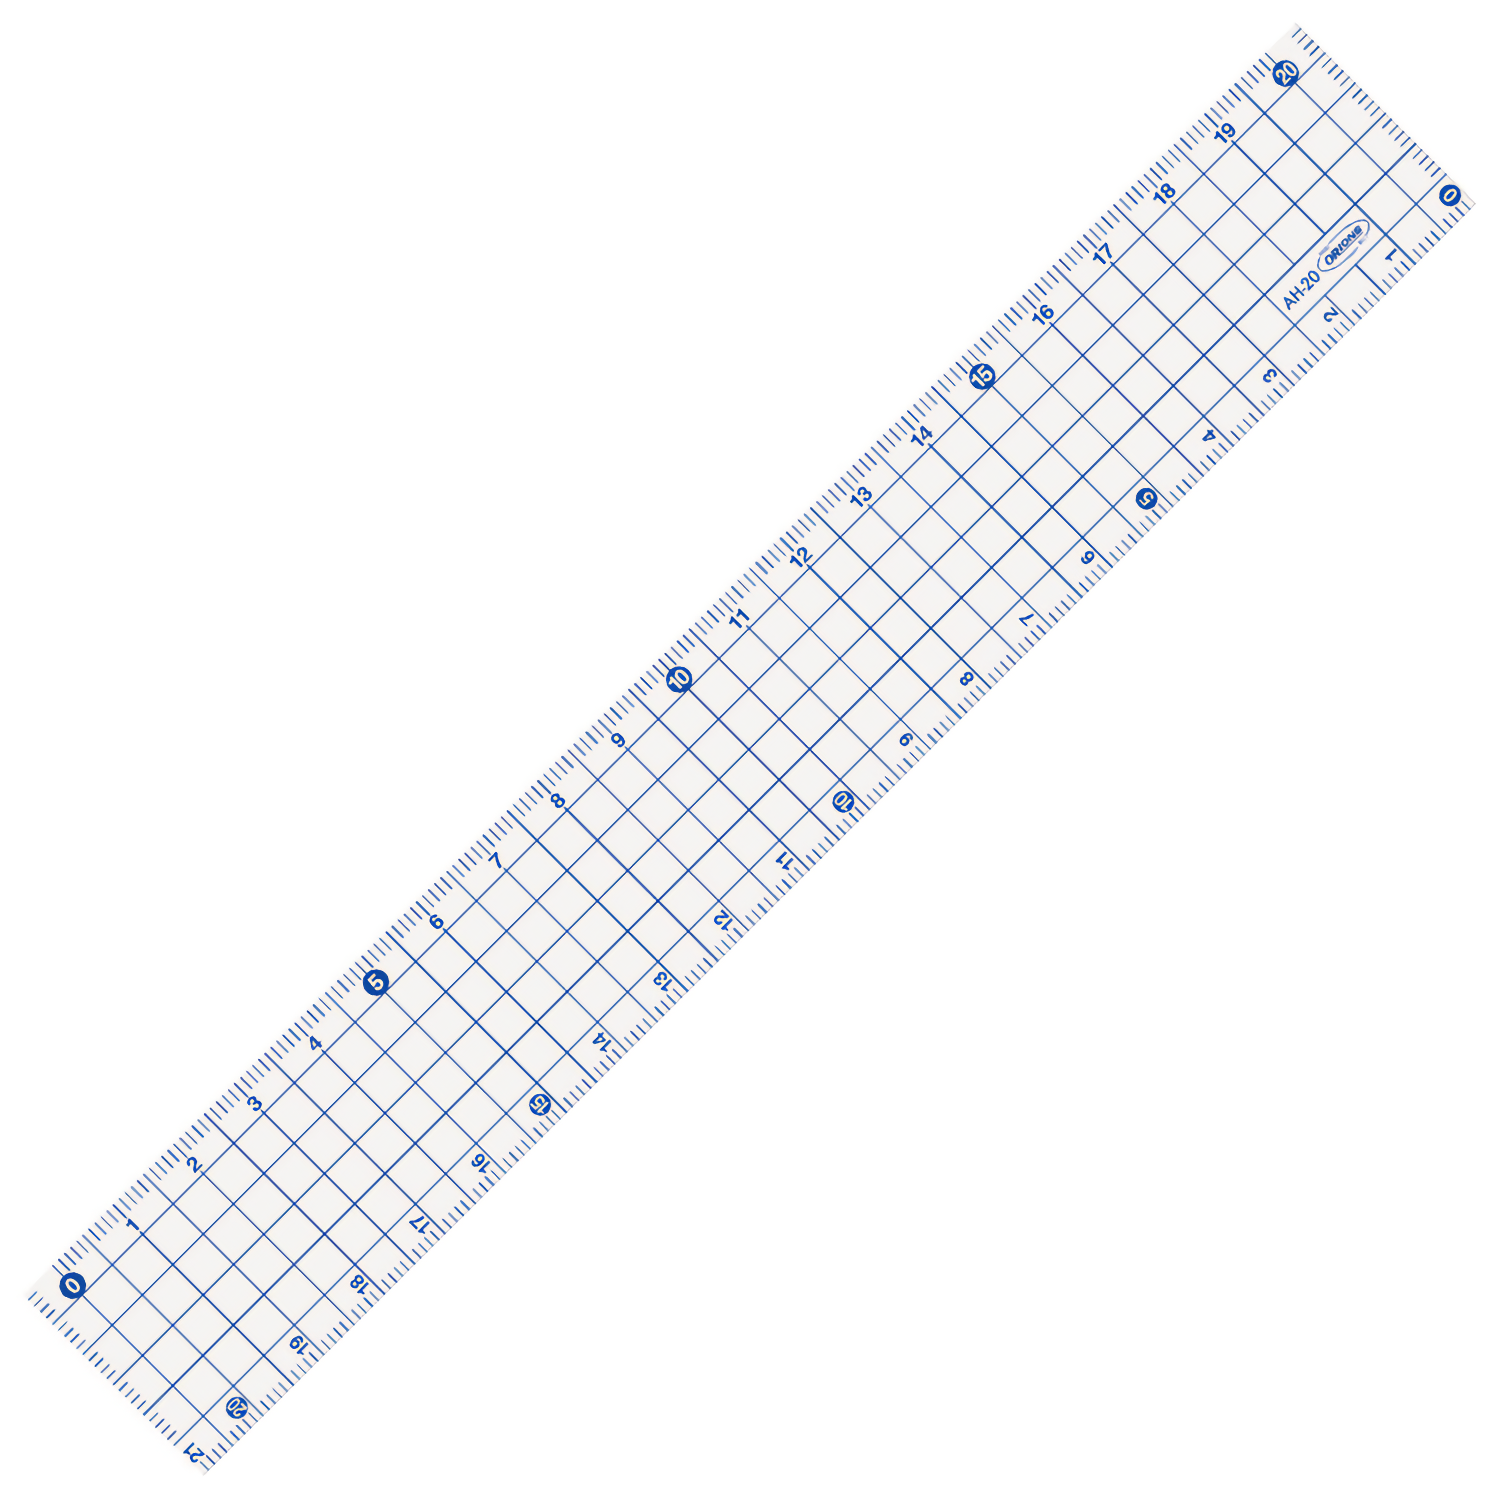 Kyoei Orions Grid Ruler 20 cm Blue